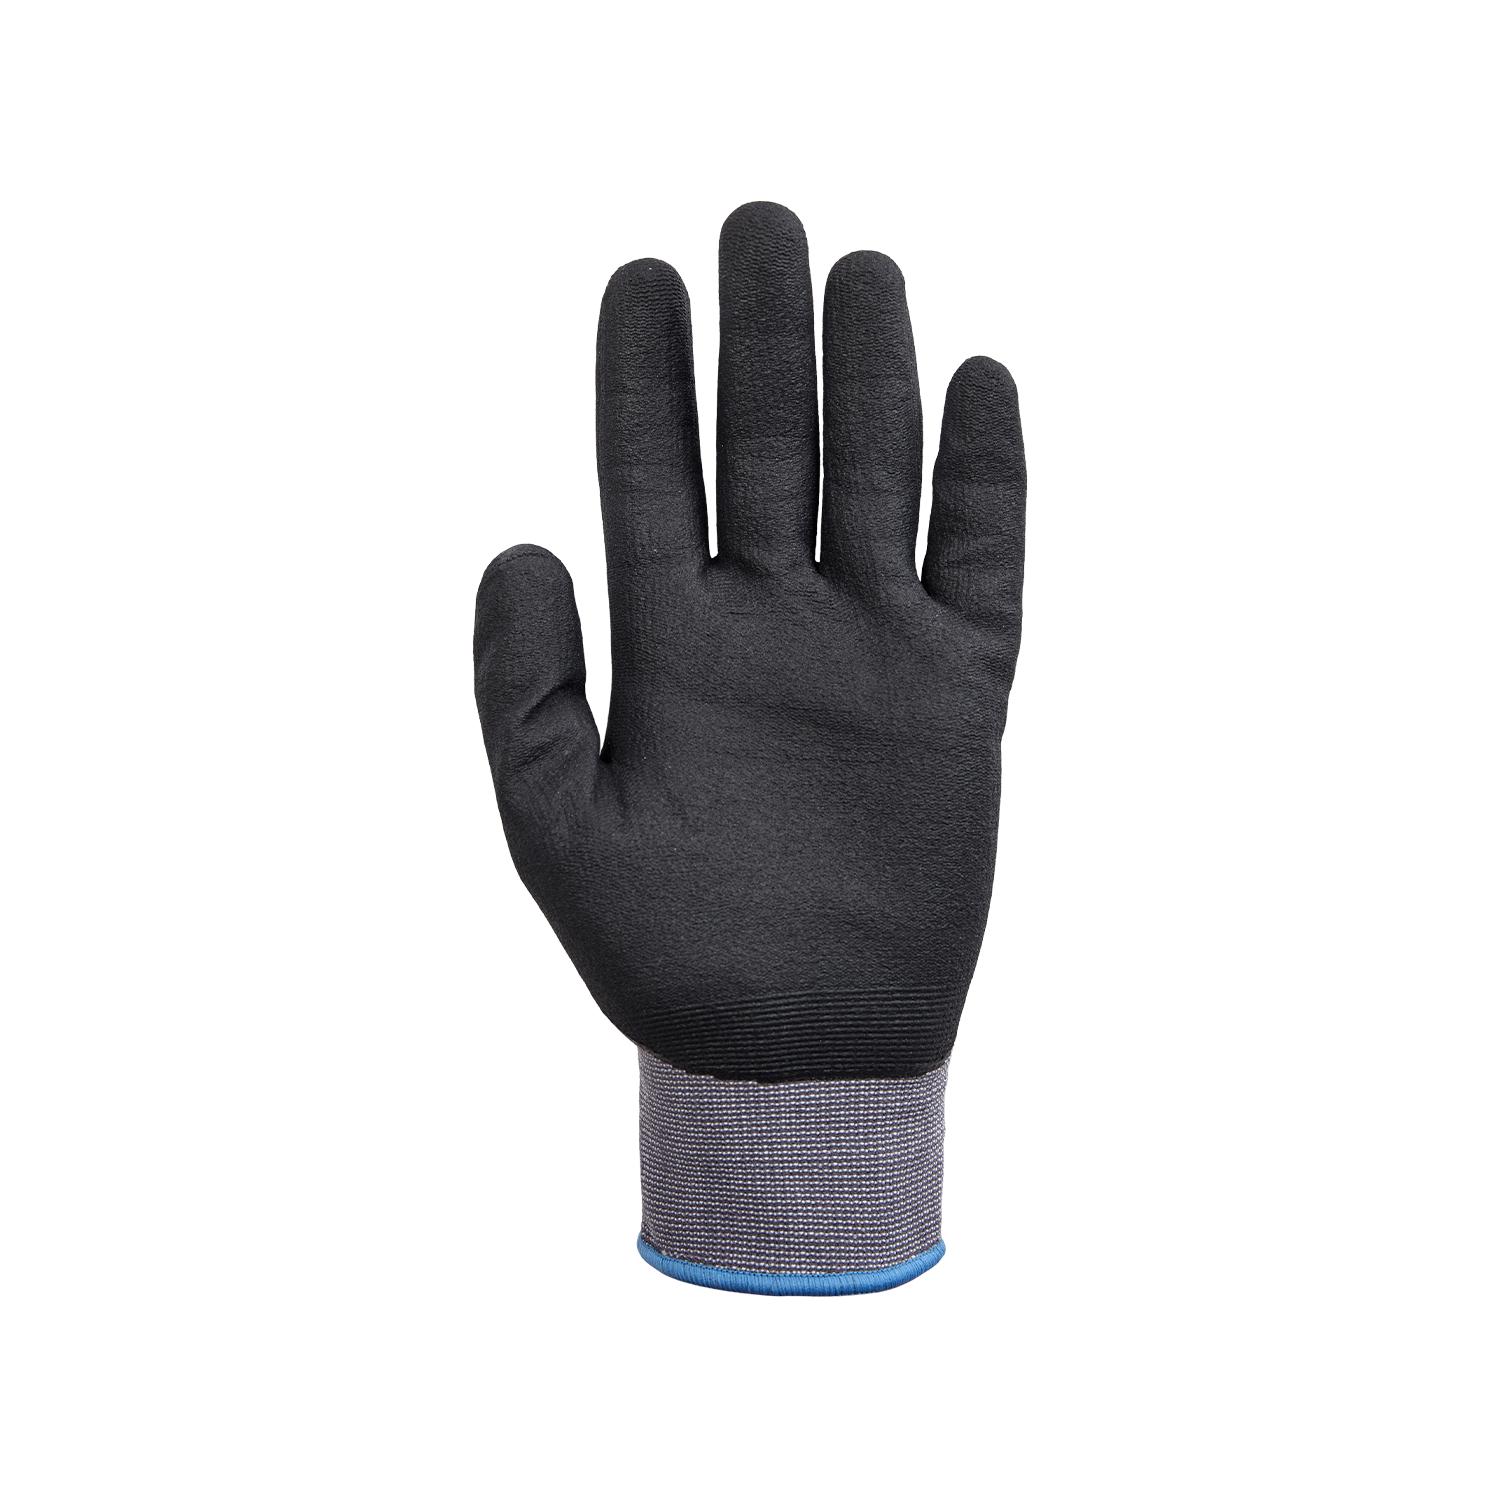 NORSE Flex Supreme assembly gloves size 7